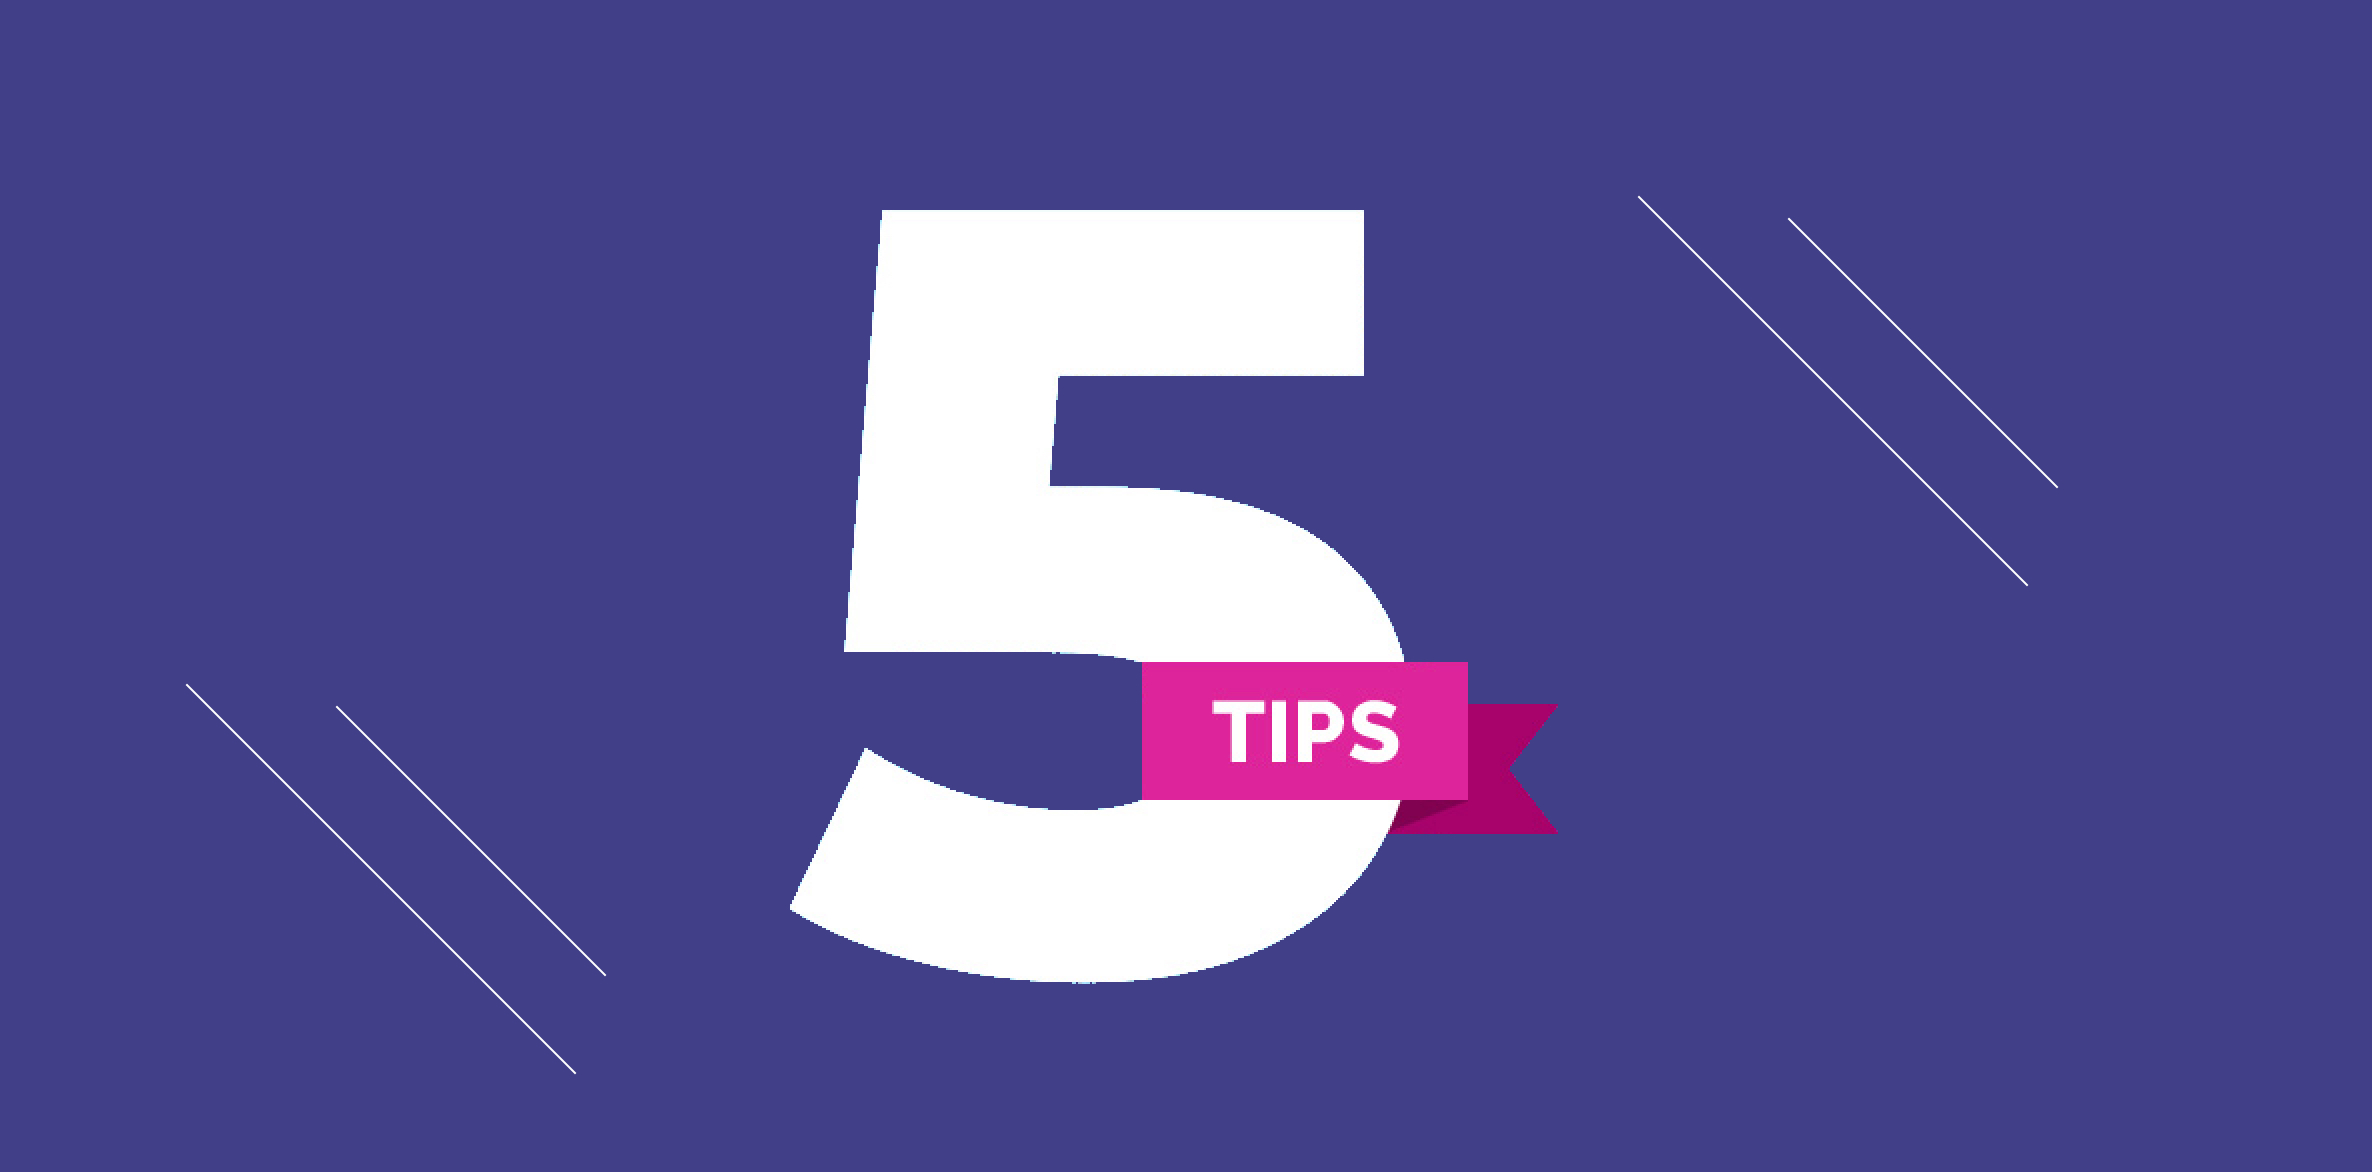 design showing 5 tips